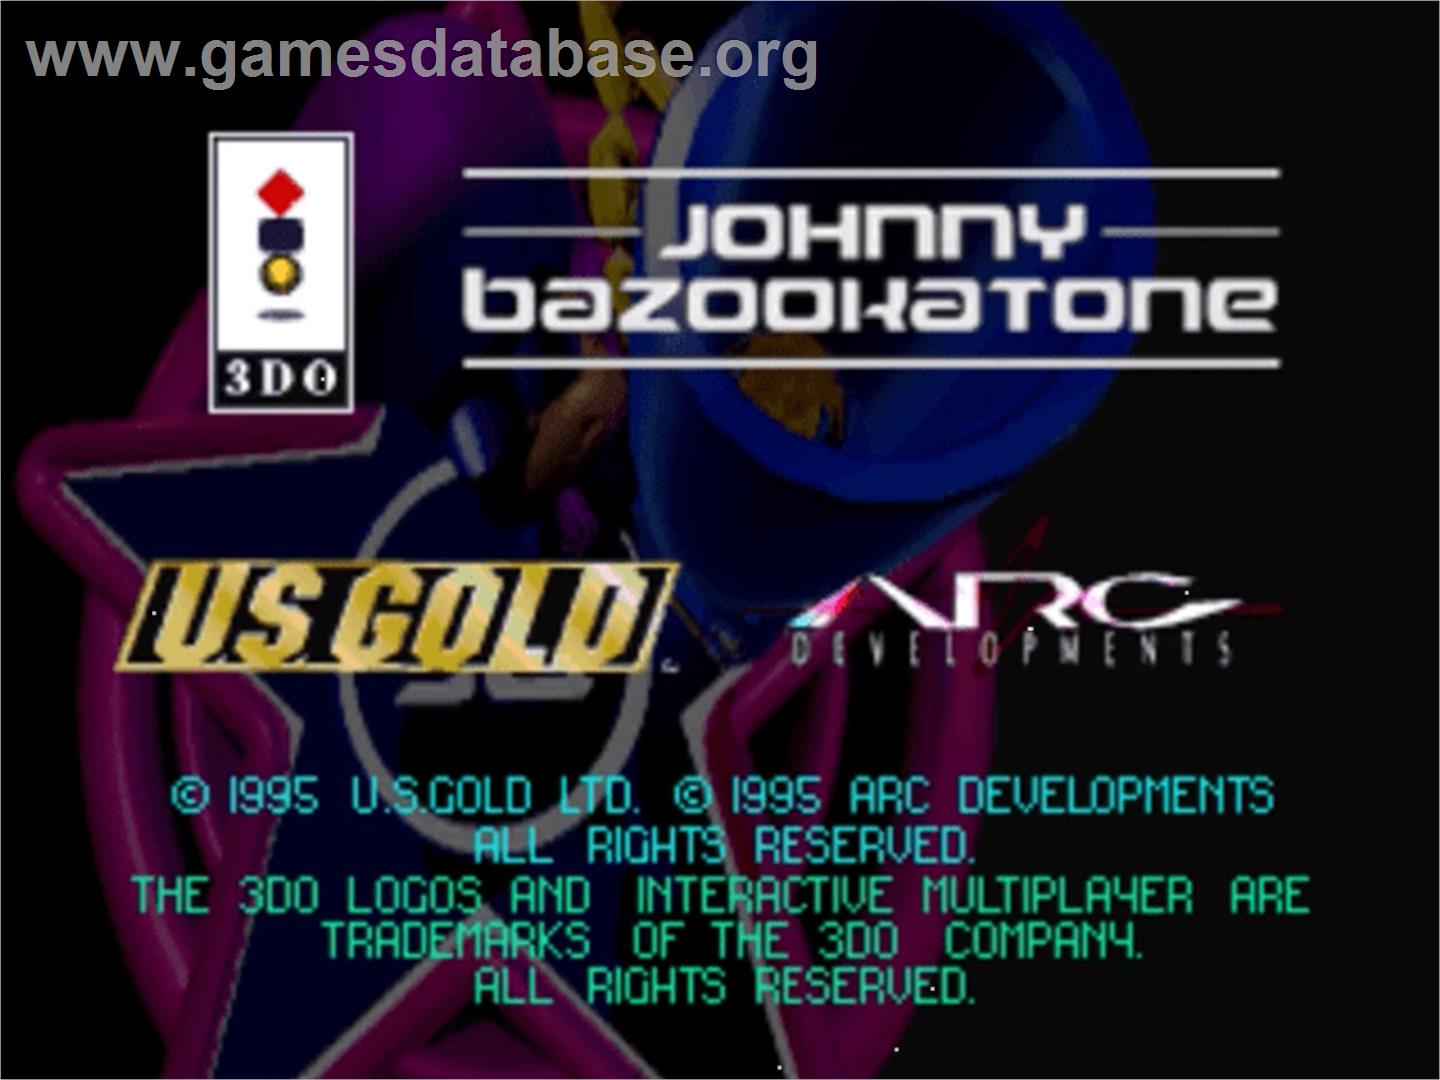 Johnny Bazookatone - Panasonic 3DO - Artwork - Title Screen